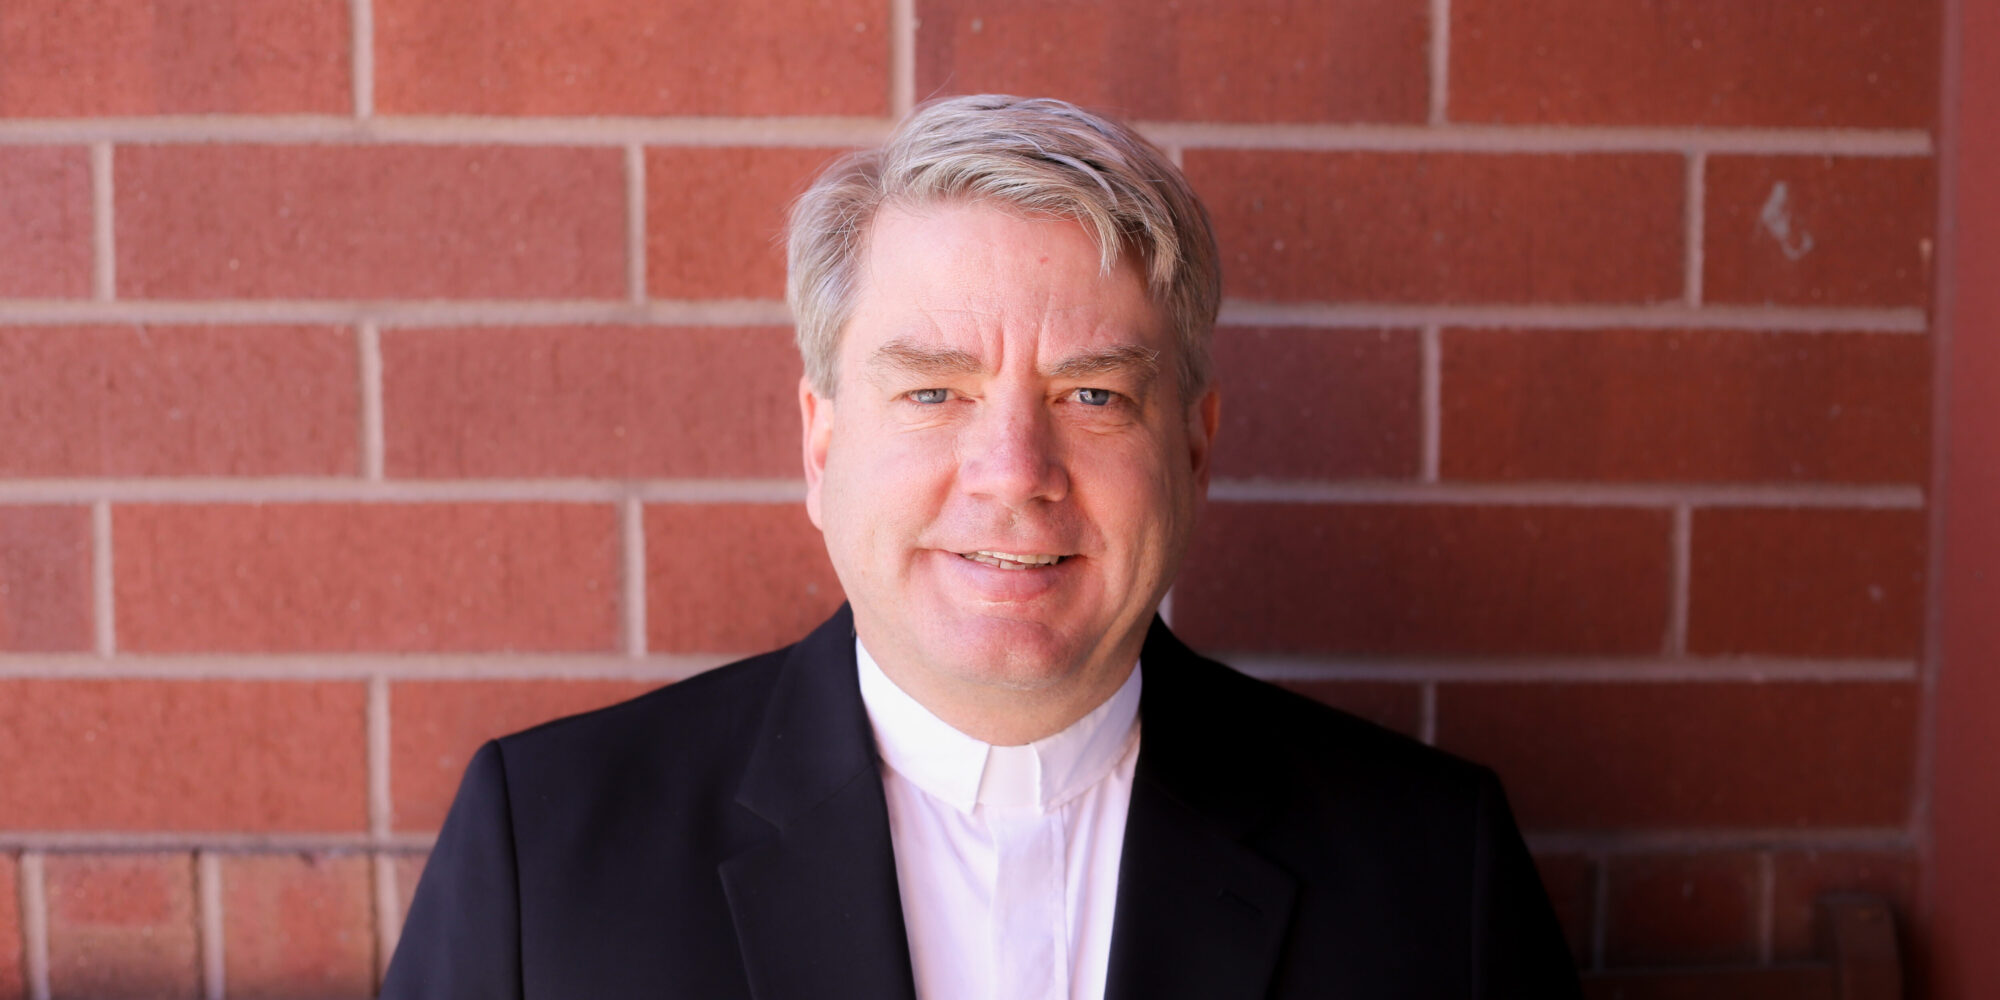 Pastor Michael Stadtmueller